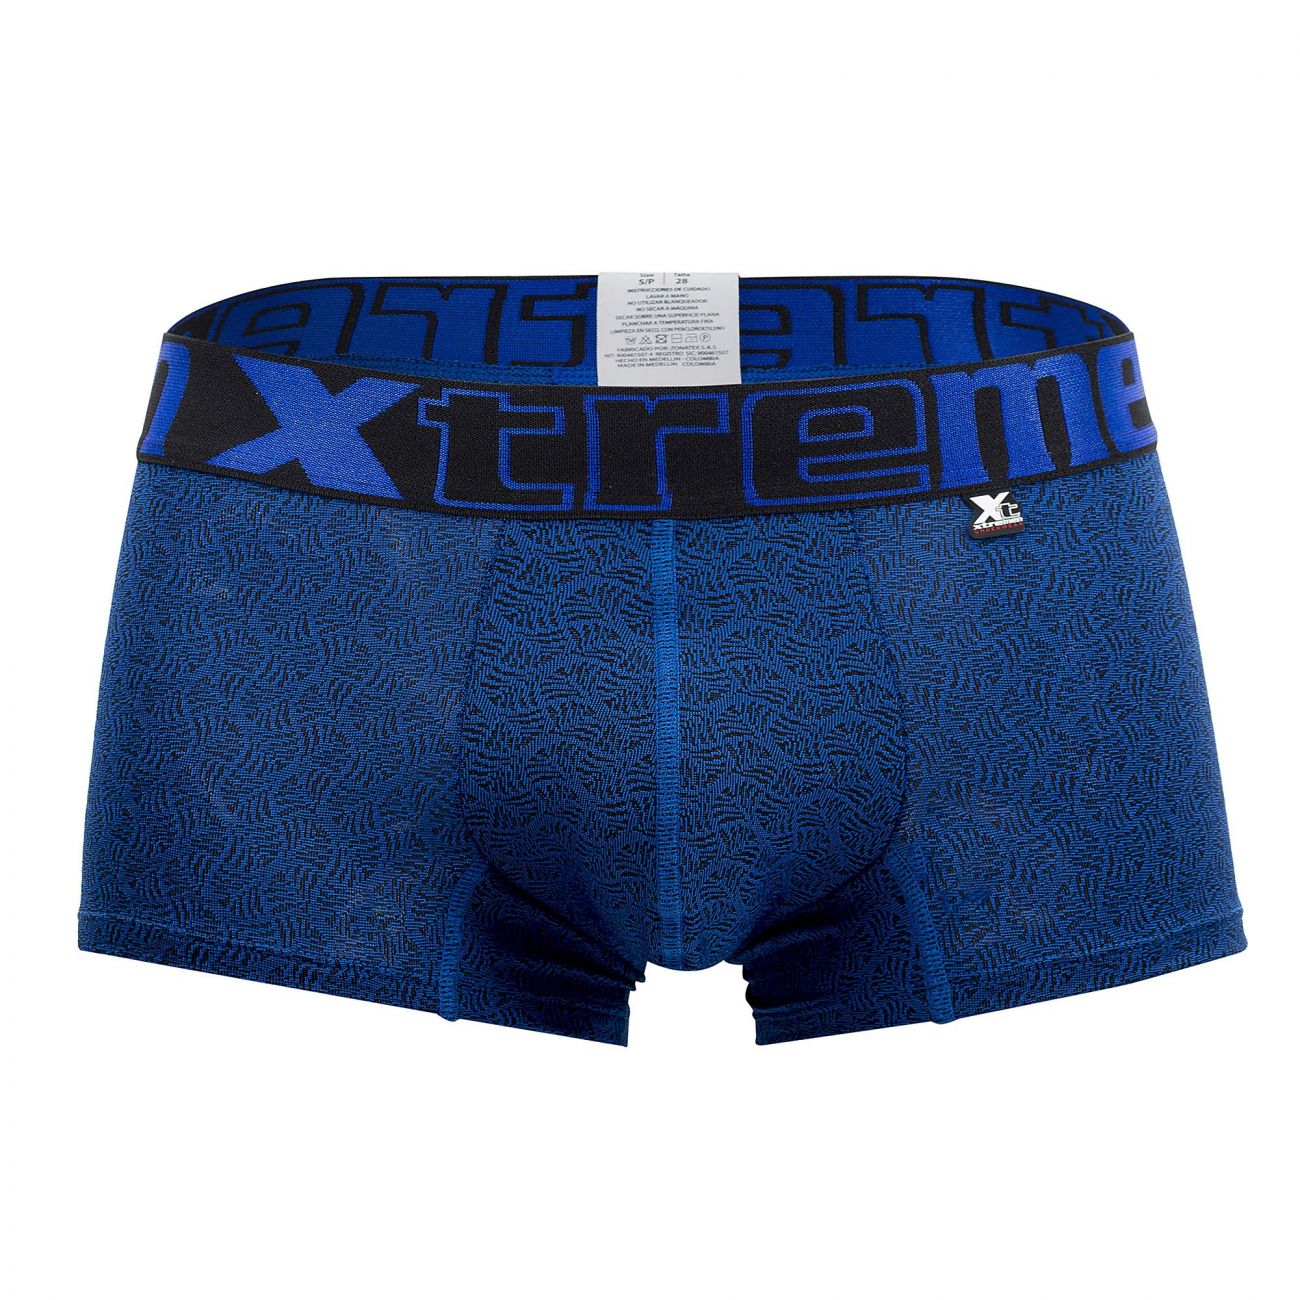 Xtremen 51478C Microfiber Jacquard Trunks